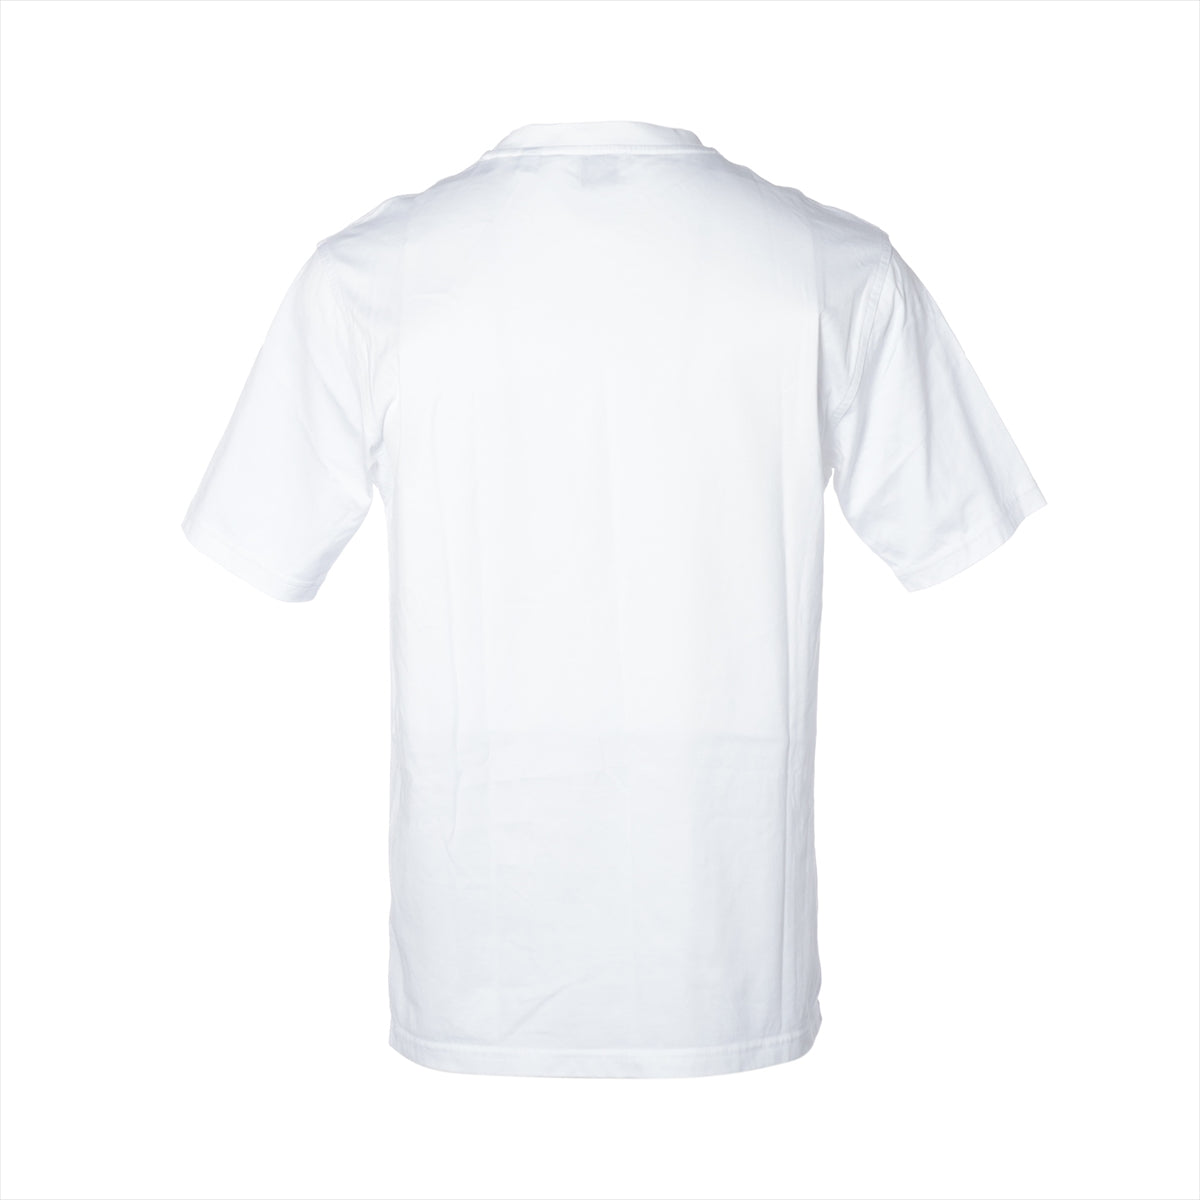 Burberry Cotton T-shirt XS Men's White  8053009 Logo Print